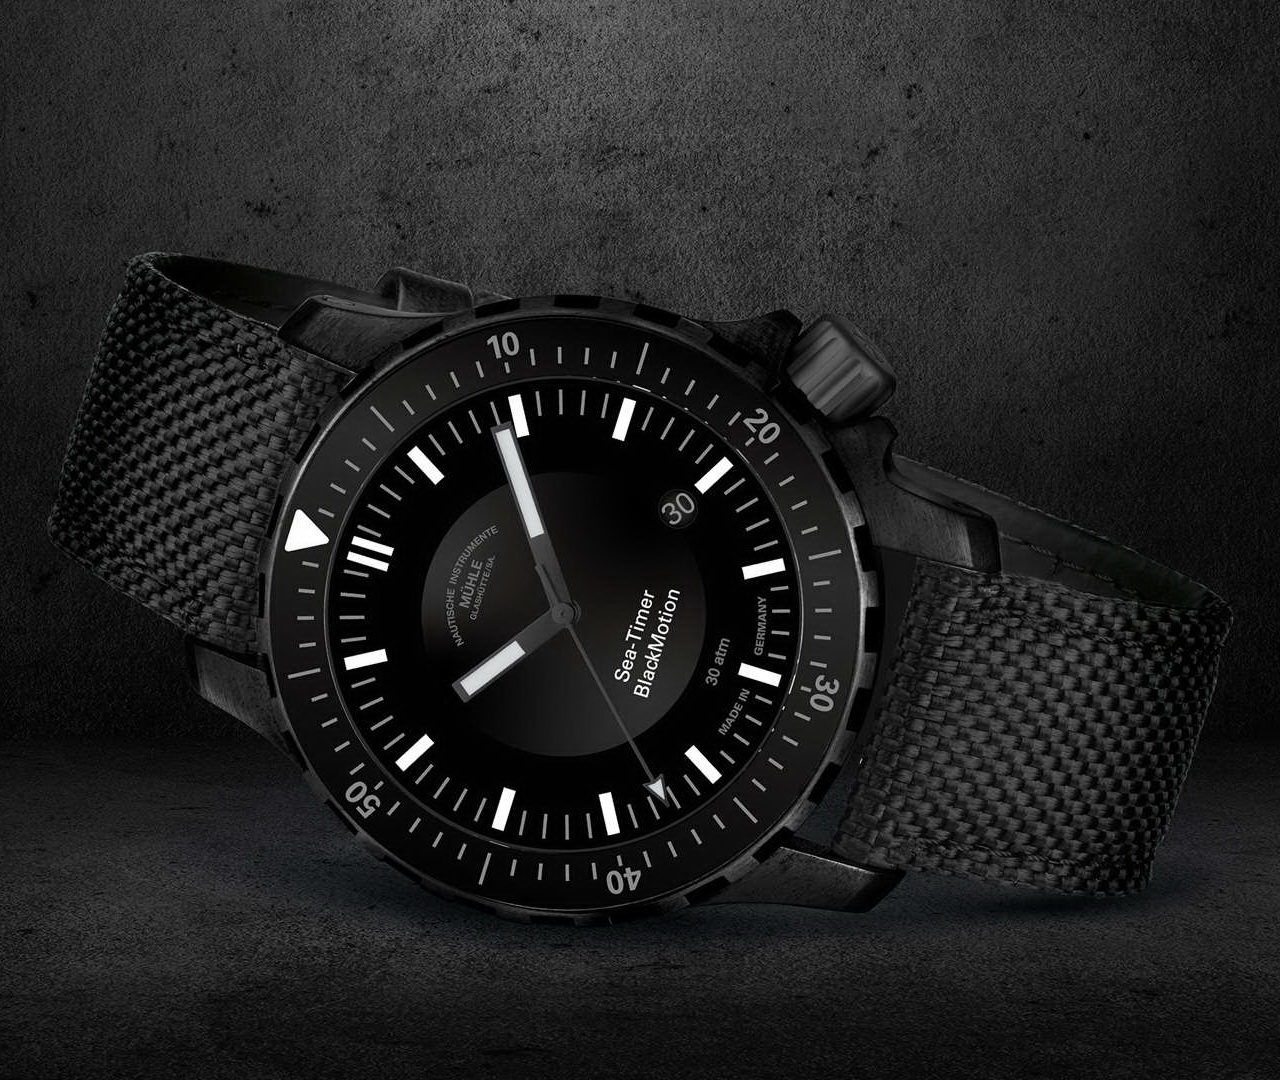 Muhle-Glashutte's new Sea-Timer BlackMotion Sea-Timer%2BBlackMotion%2B01